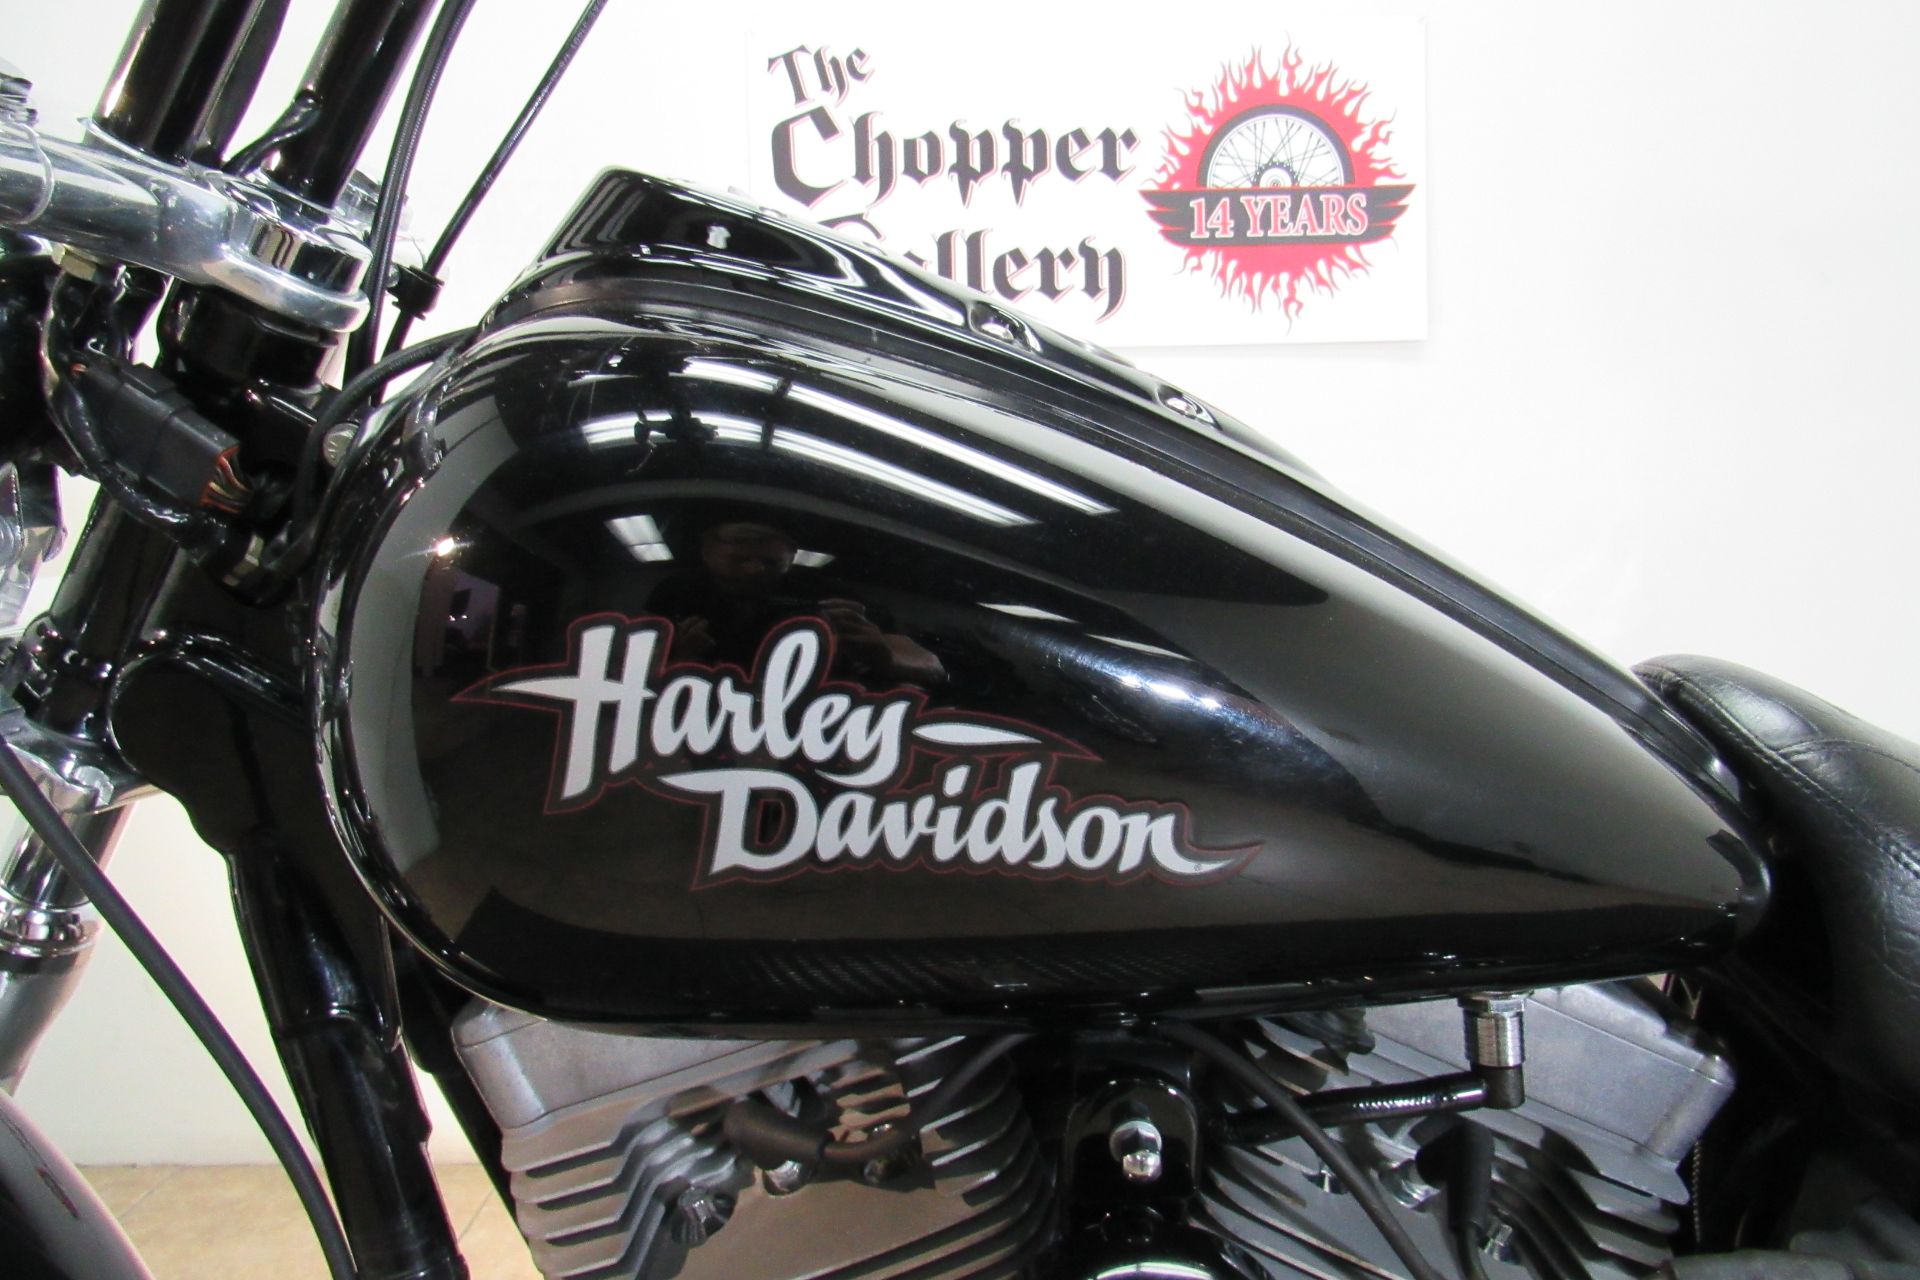 2009 Harley-Davidson Super Glide in Temecula, California - Photo 8